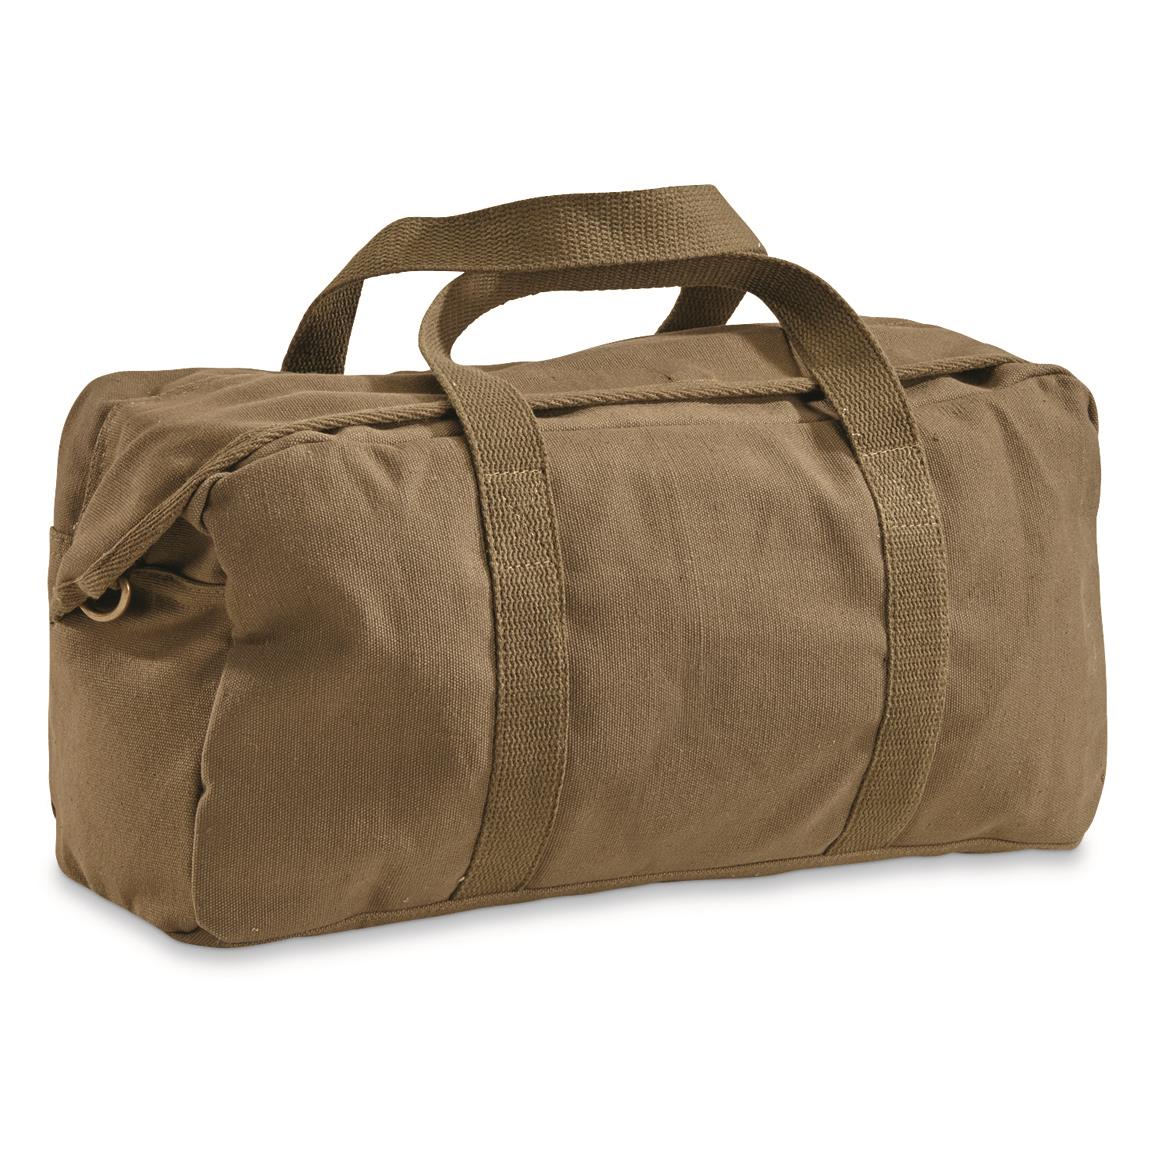 military style duffle bag